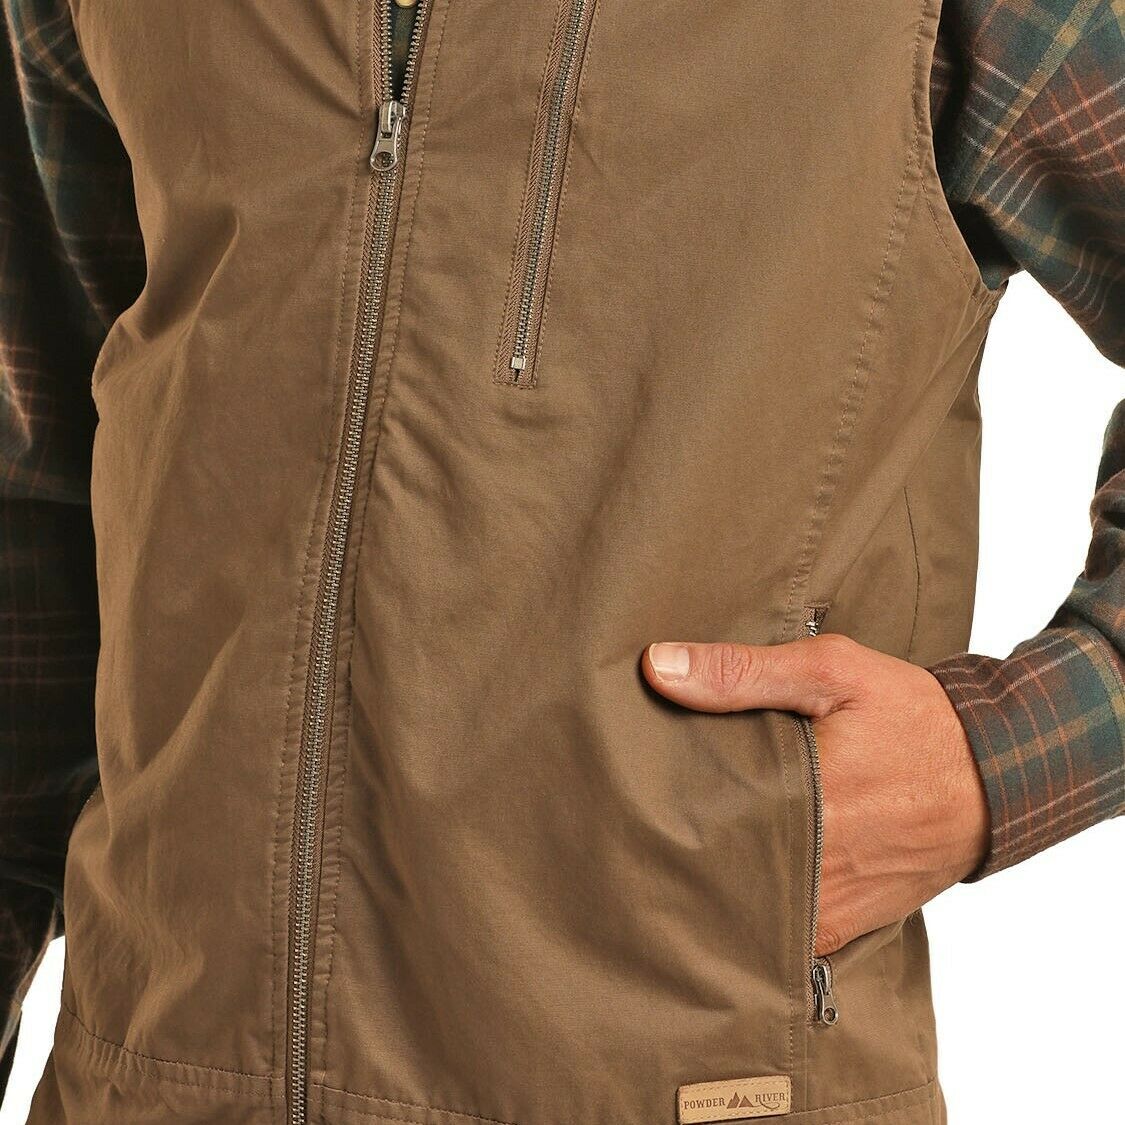 Powder River Outfitters Men's Cotton Brown Vest 98-6756-25